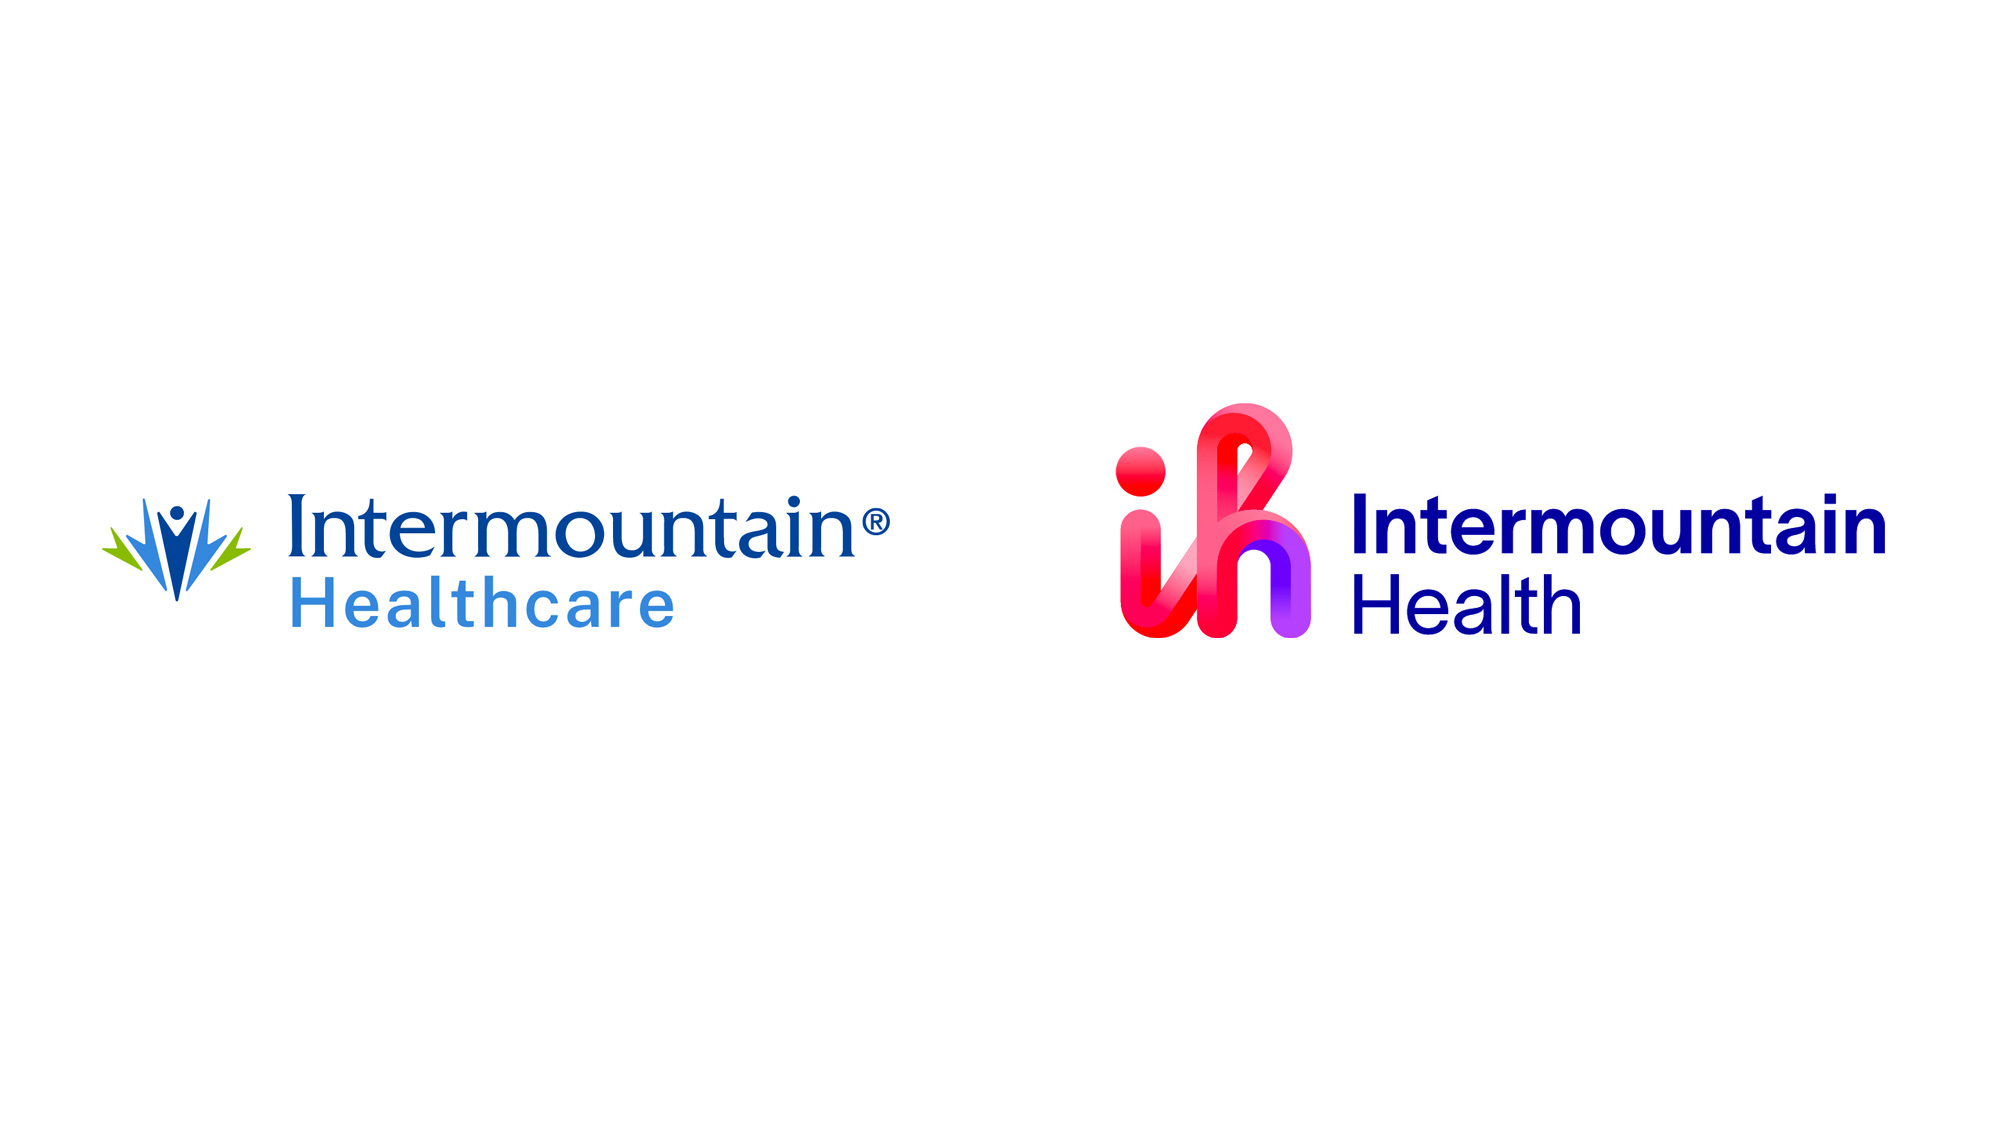 Brand New New Logo for Intermountain Health